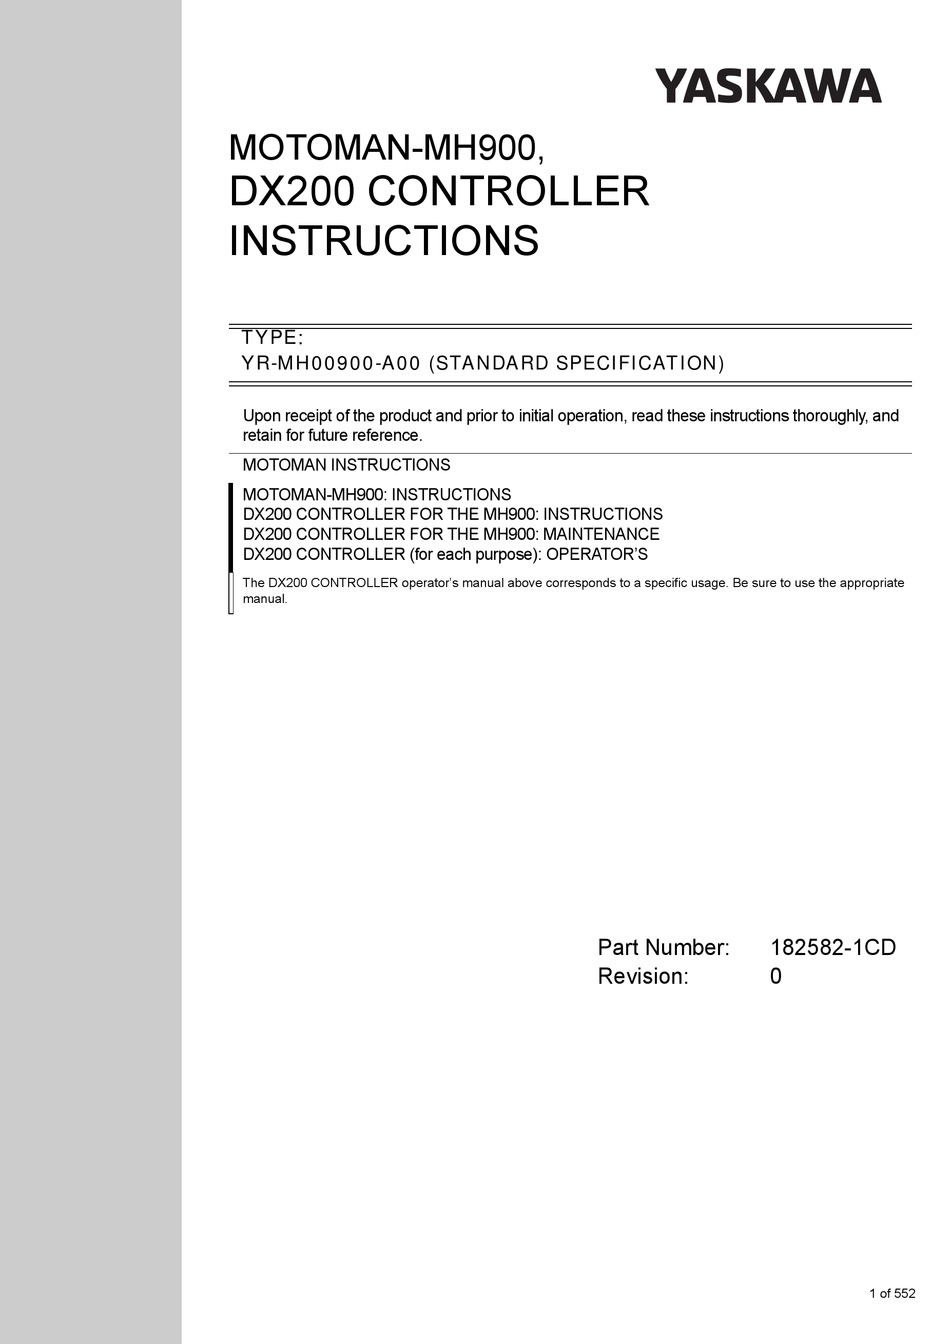 YASKAWA DX200 INSTRUCTIONS MANUAL Pdf Download | ManualsLib